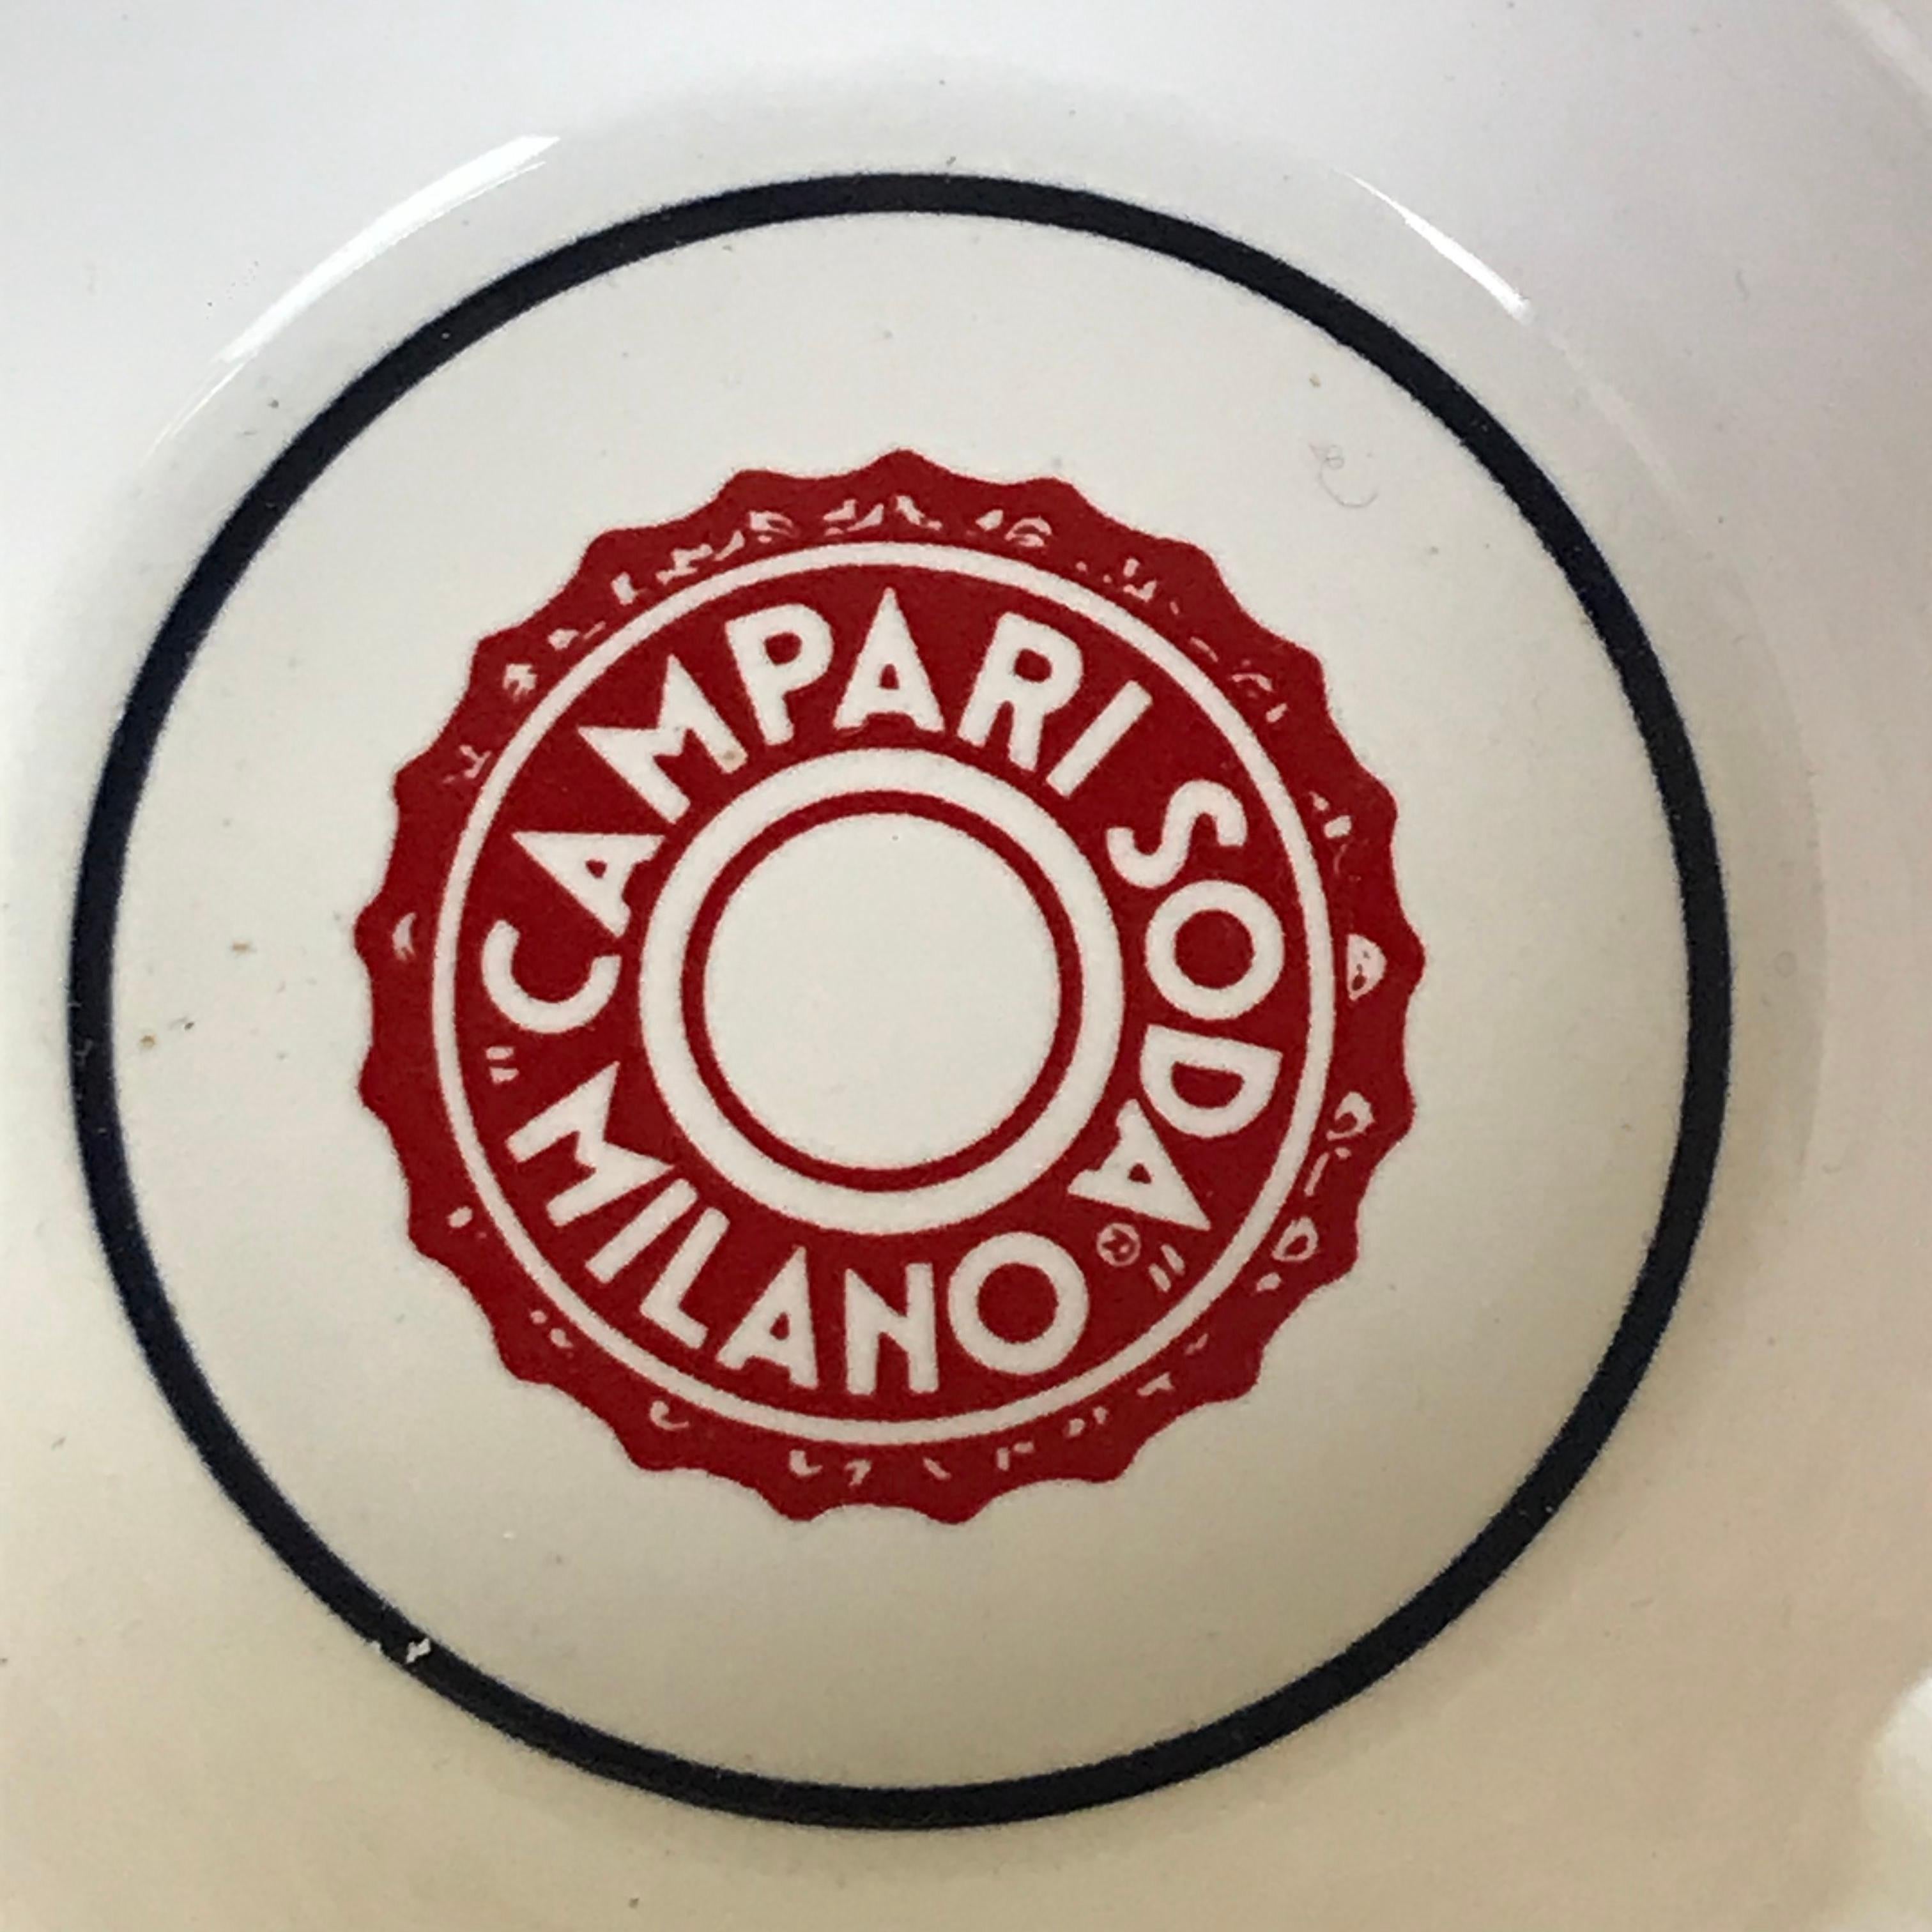 1970s Vintage Advertising Campari Soda Milano Ashtray in White and Red Ceramic For Sale 1